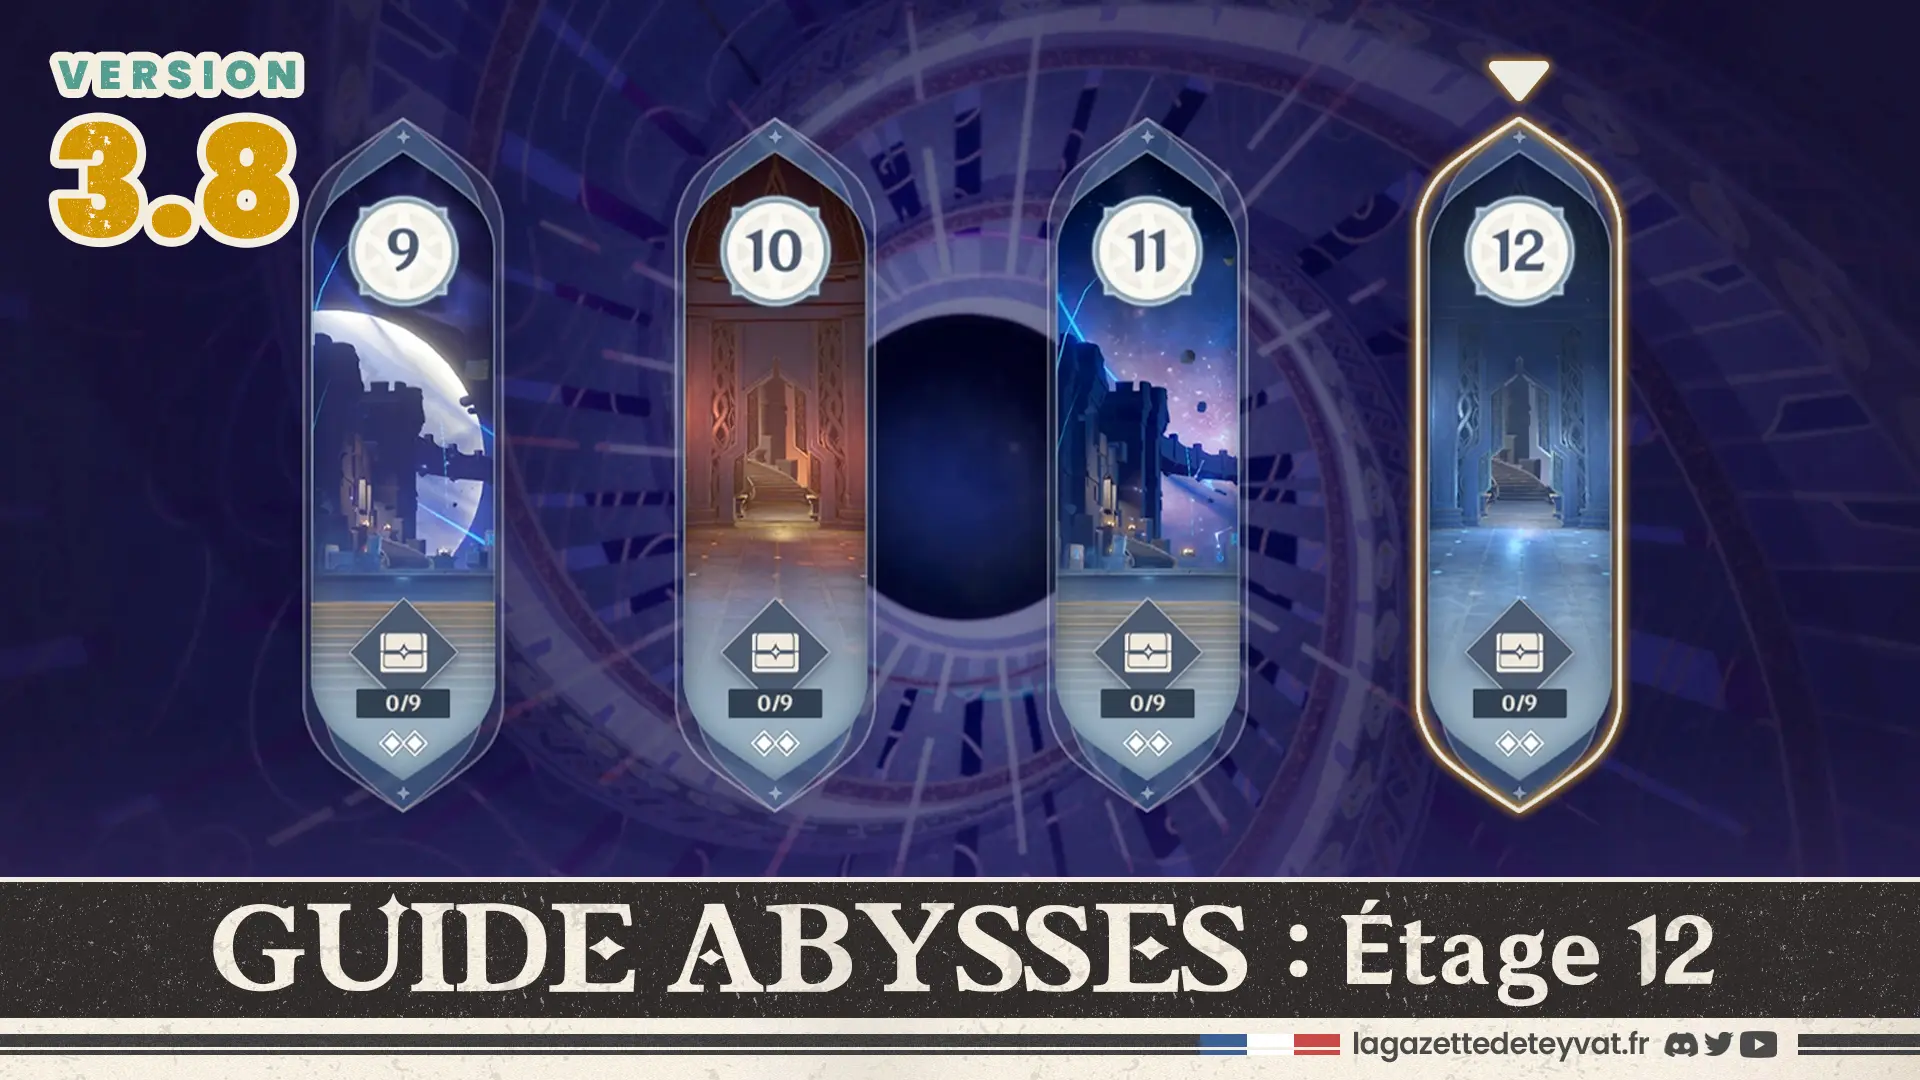 Abysses 3.8 étage 12